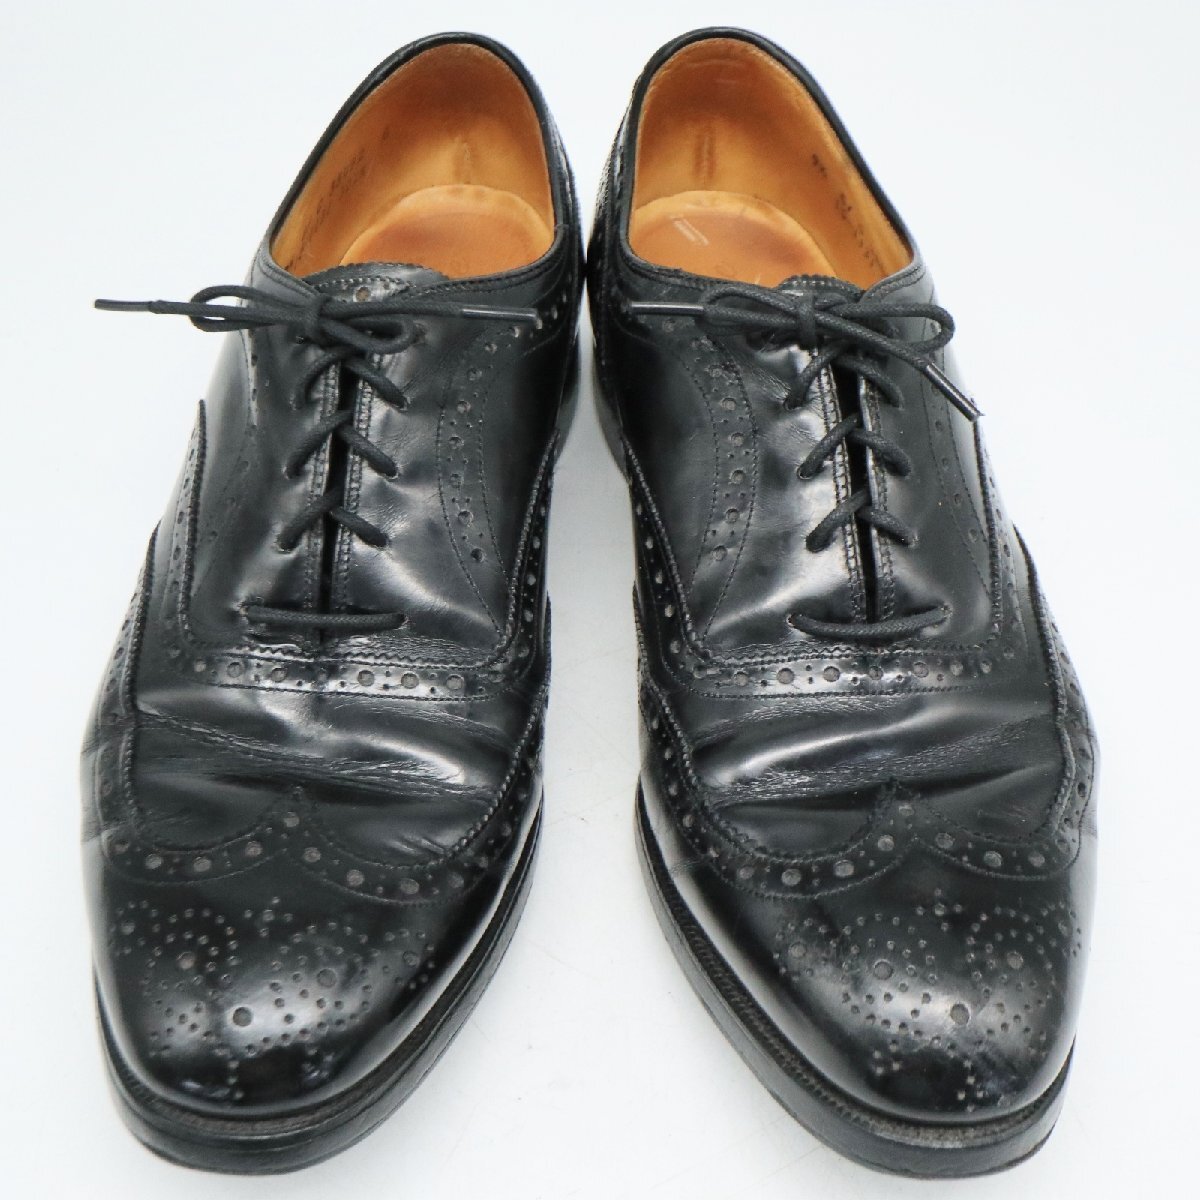 USA製 Johnston&Murphy 内羽根式 ウィングチップ 革靴 レザーシューズ ブラック ( メンズ 9 1/2 E ≒ 27.5cm ) KA0169 1円スタート_画像1